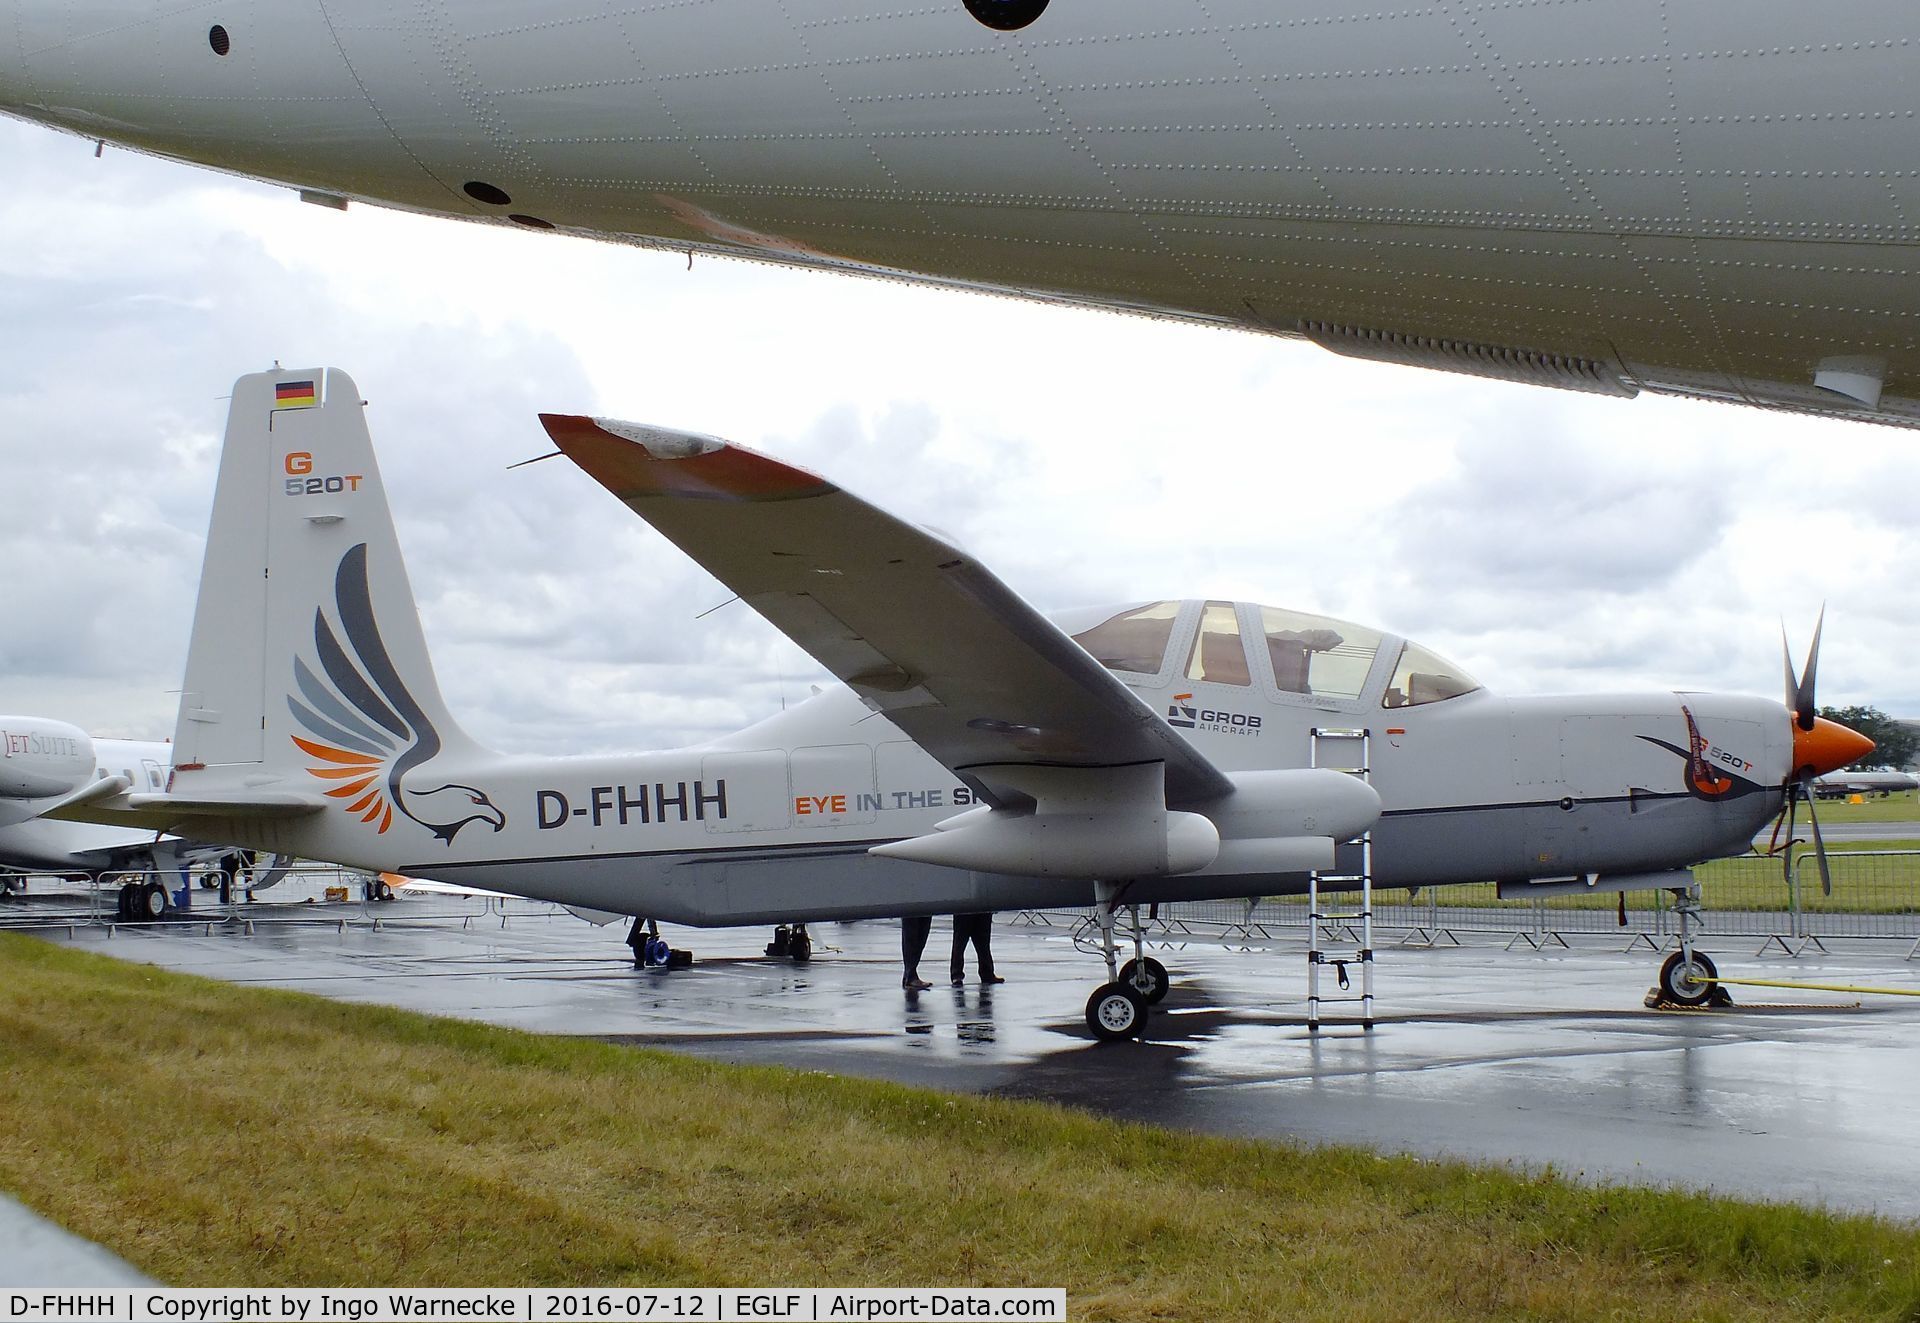 D-FHHH, Grob G-520T Egrett II C/N 10200, Grob G.520T Egrett II at Farnborough International 2016